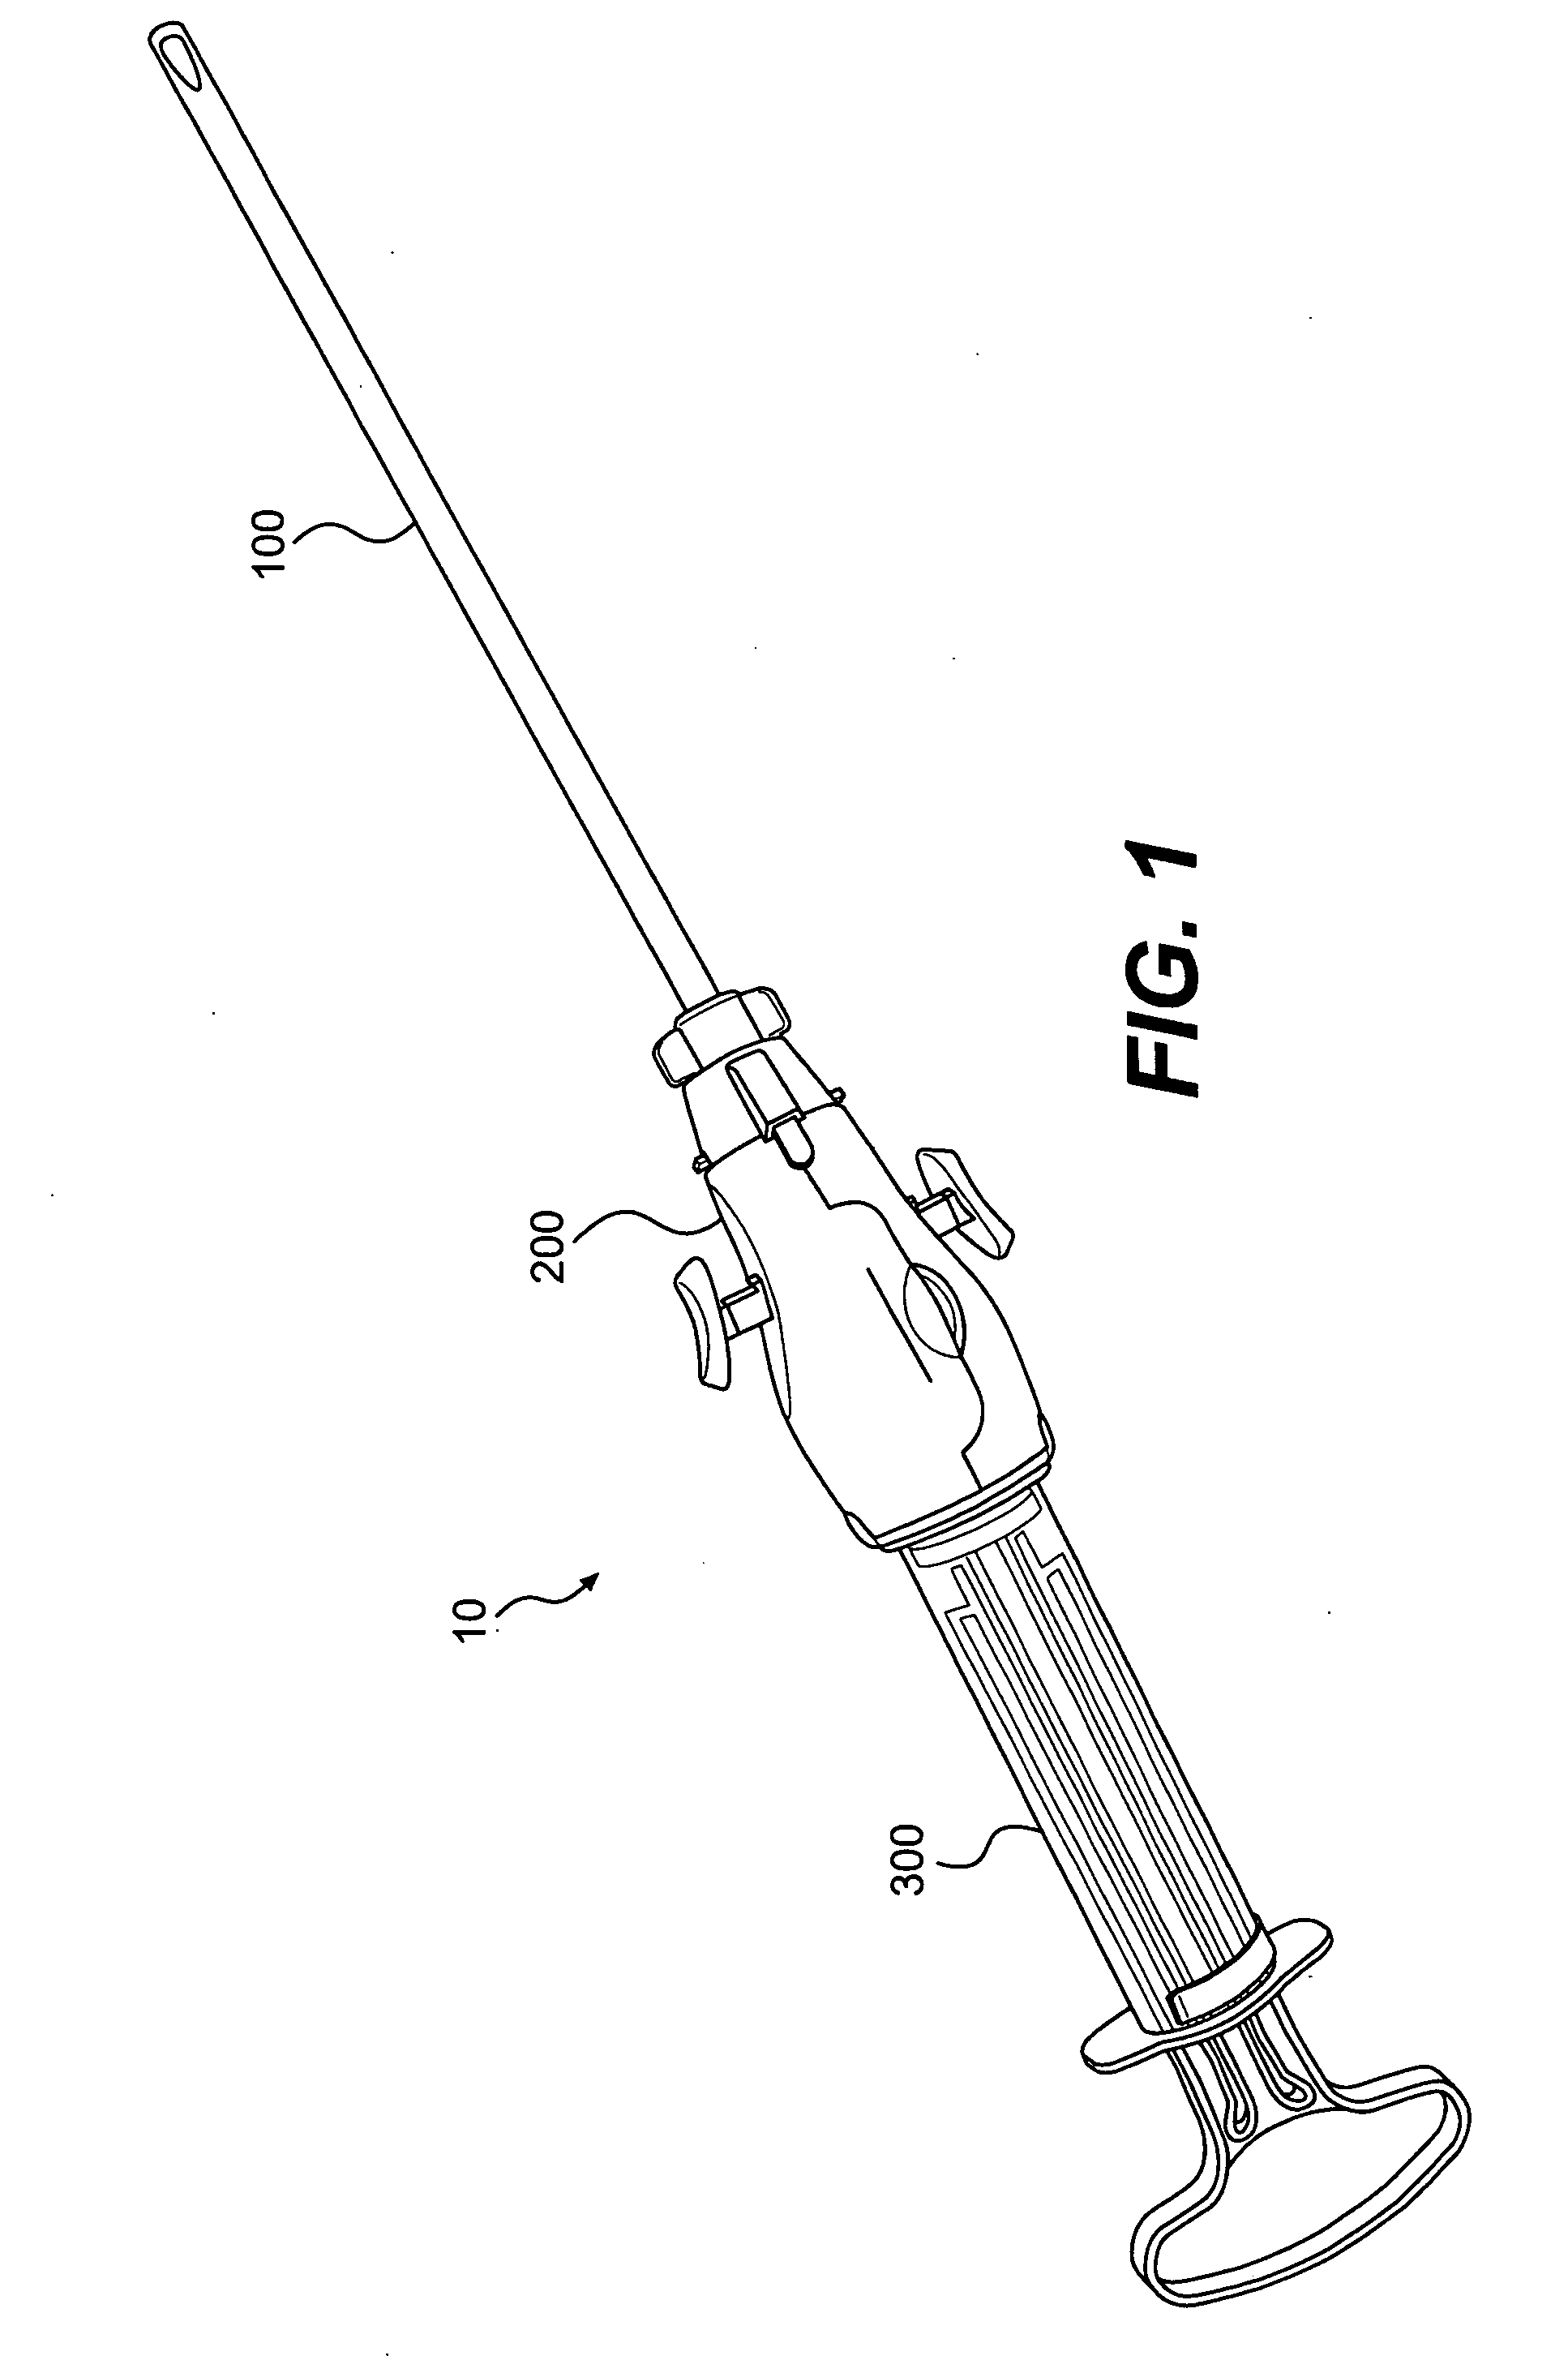 Medical vacuum aspiration device